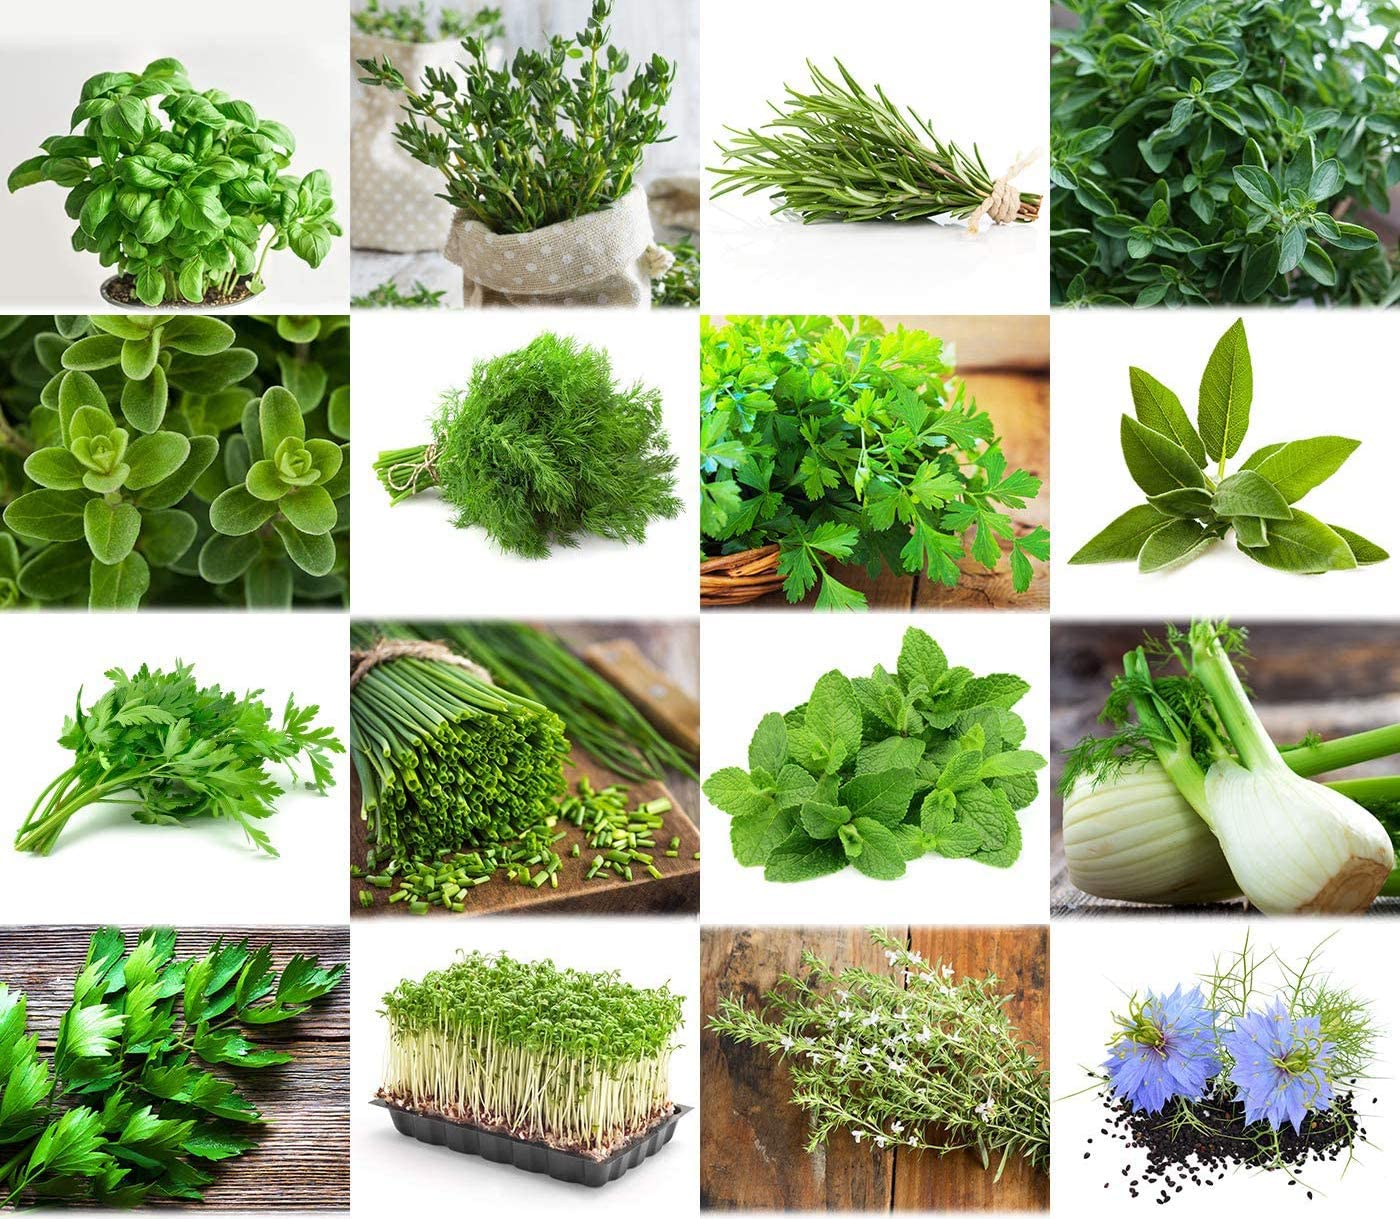 *Set 'Herb Garden' 16 x 50 Seeds of The Most Popular Herbs